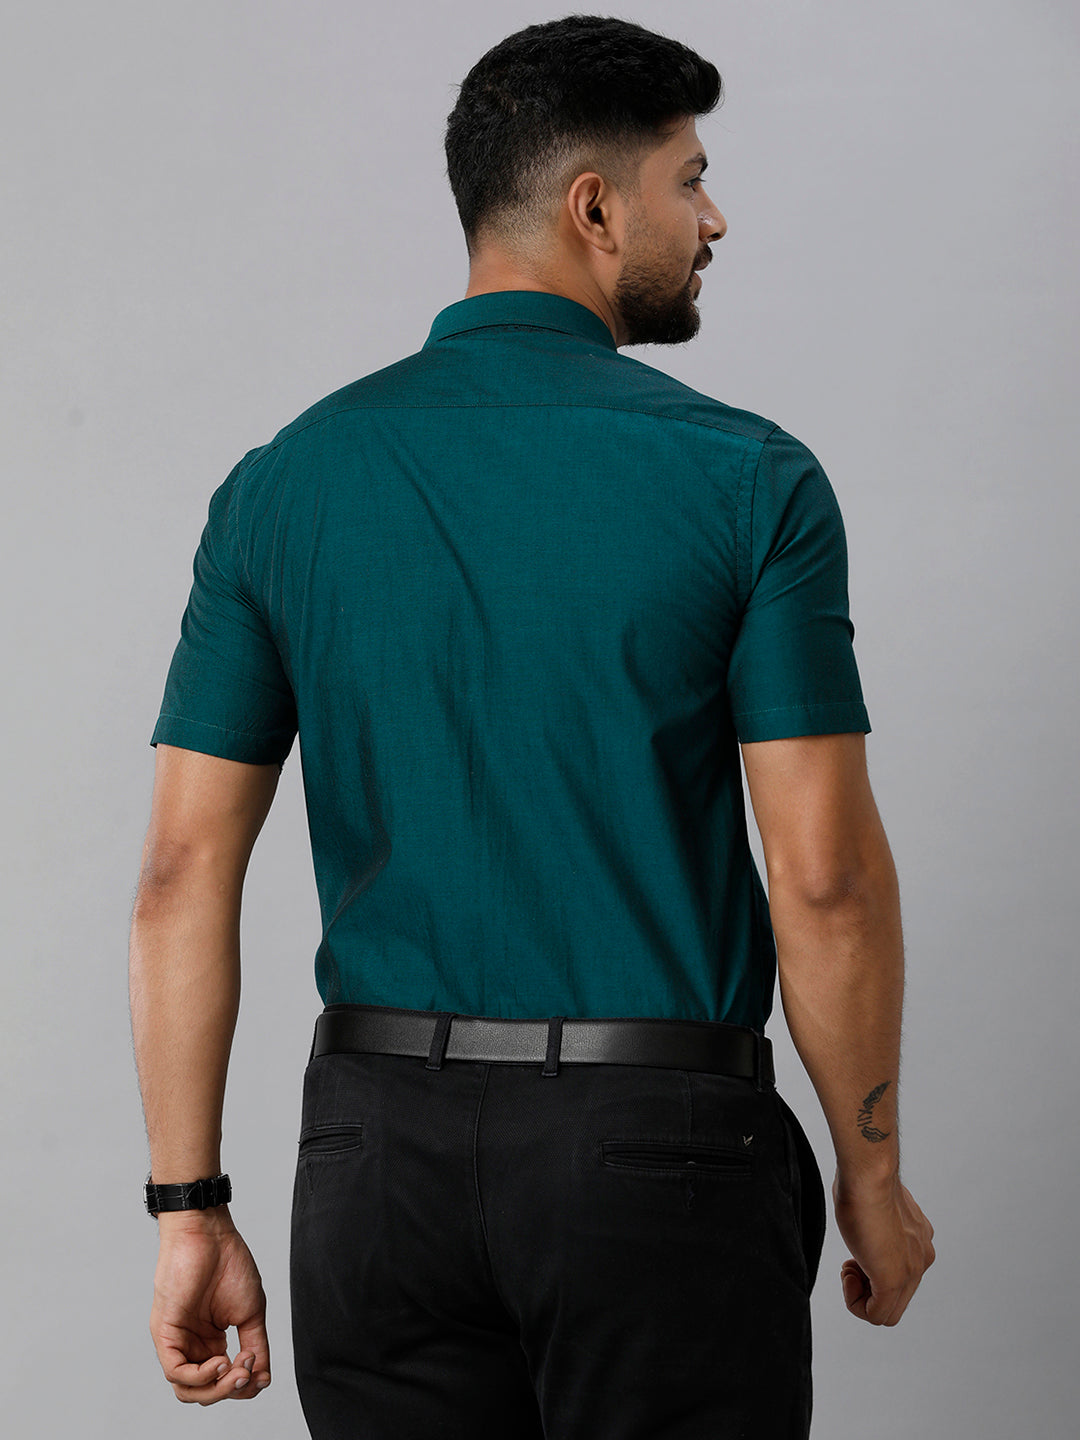 Mens Premium Cotton Formal Shirt Half Sleeves Dark Green MH G116-Back view